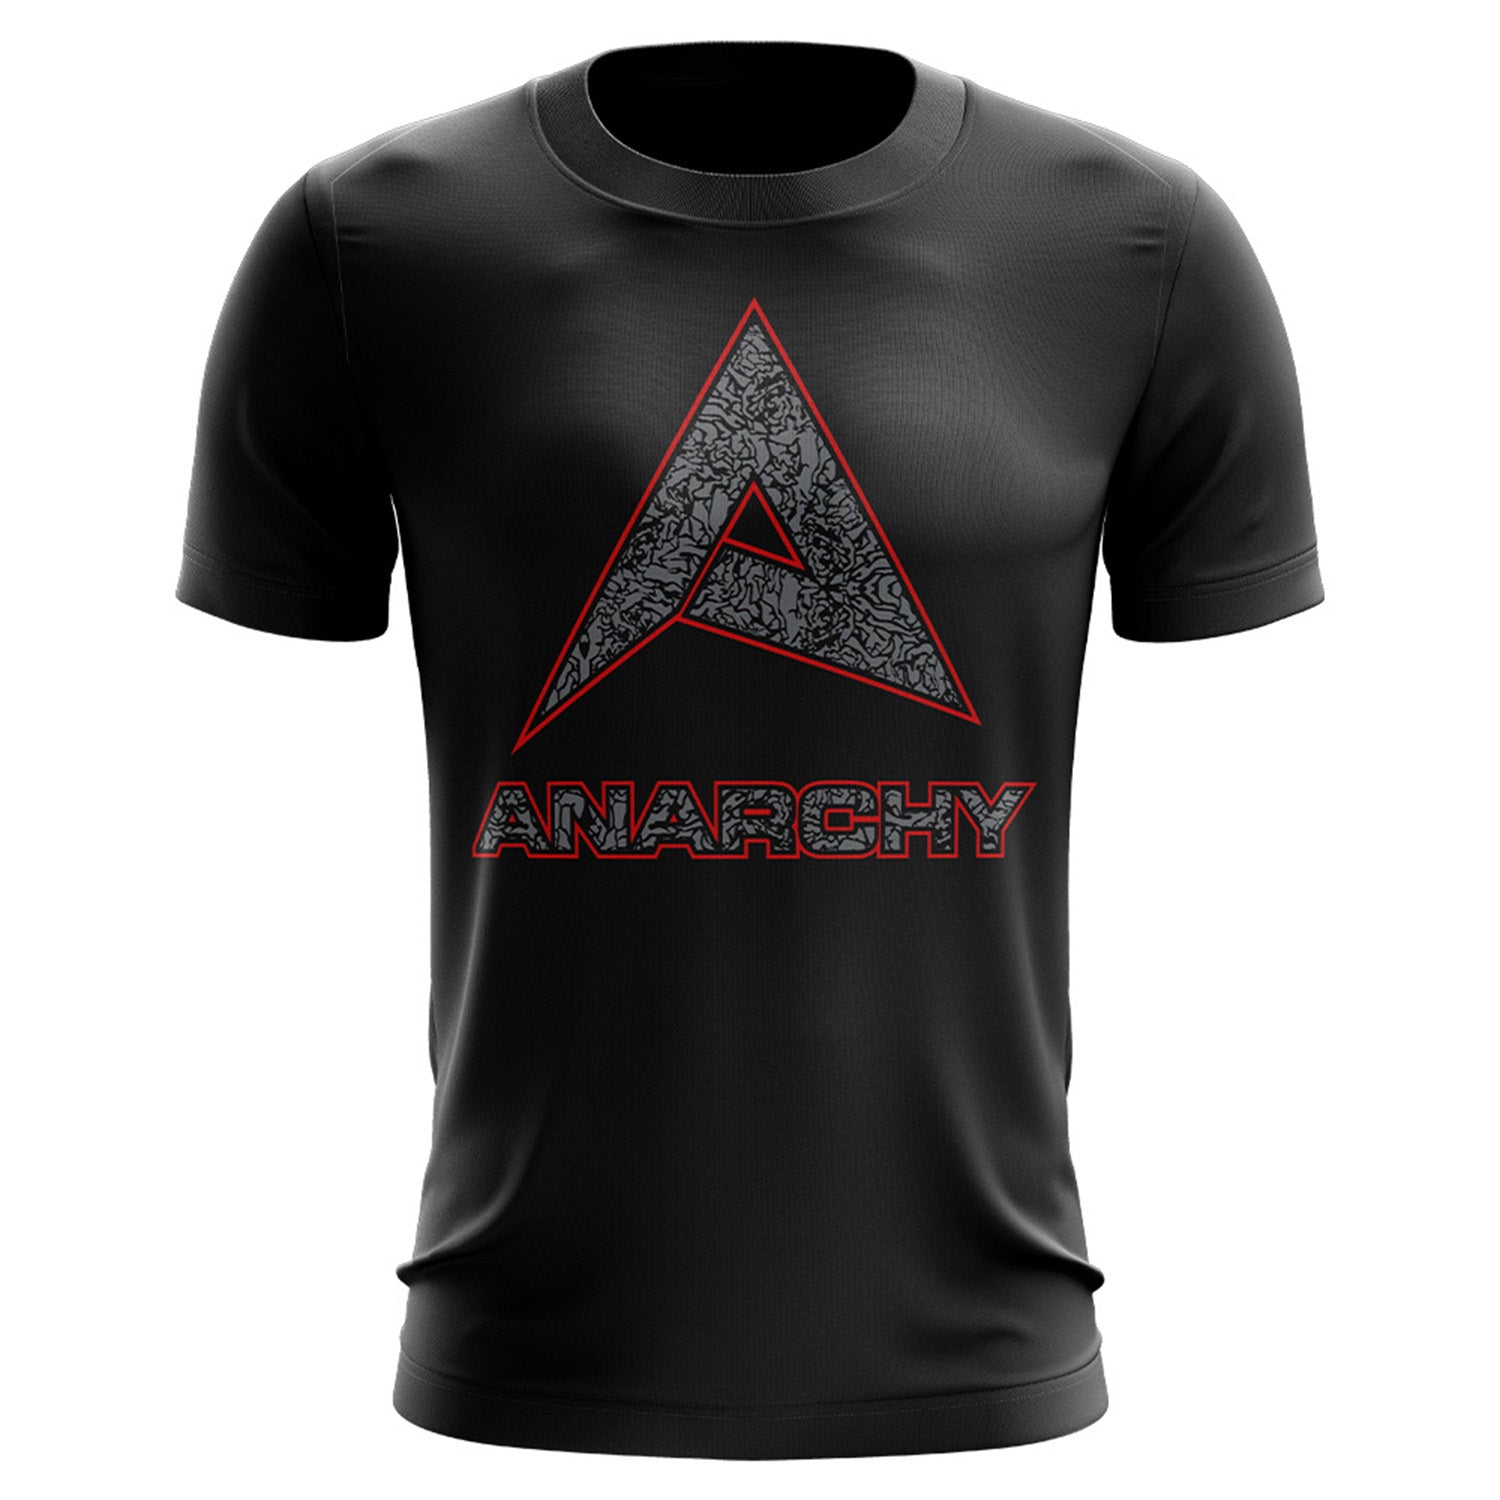 Anarchy Bat Company Short Sleeve Shirt - Elephant (Black)